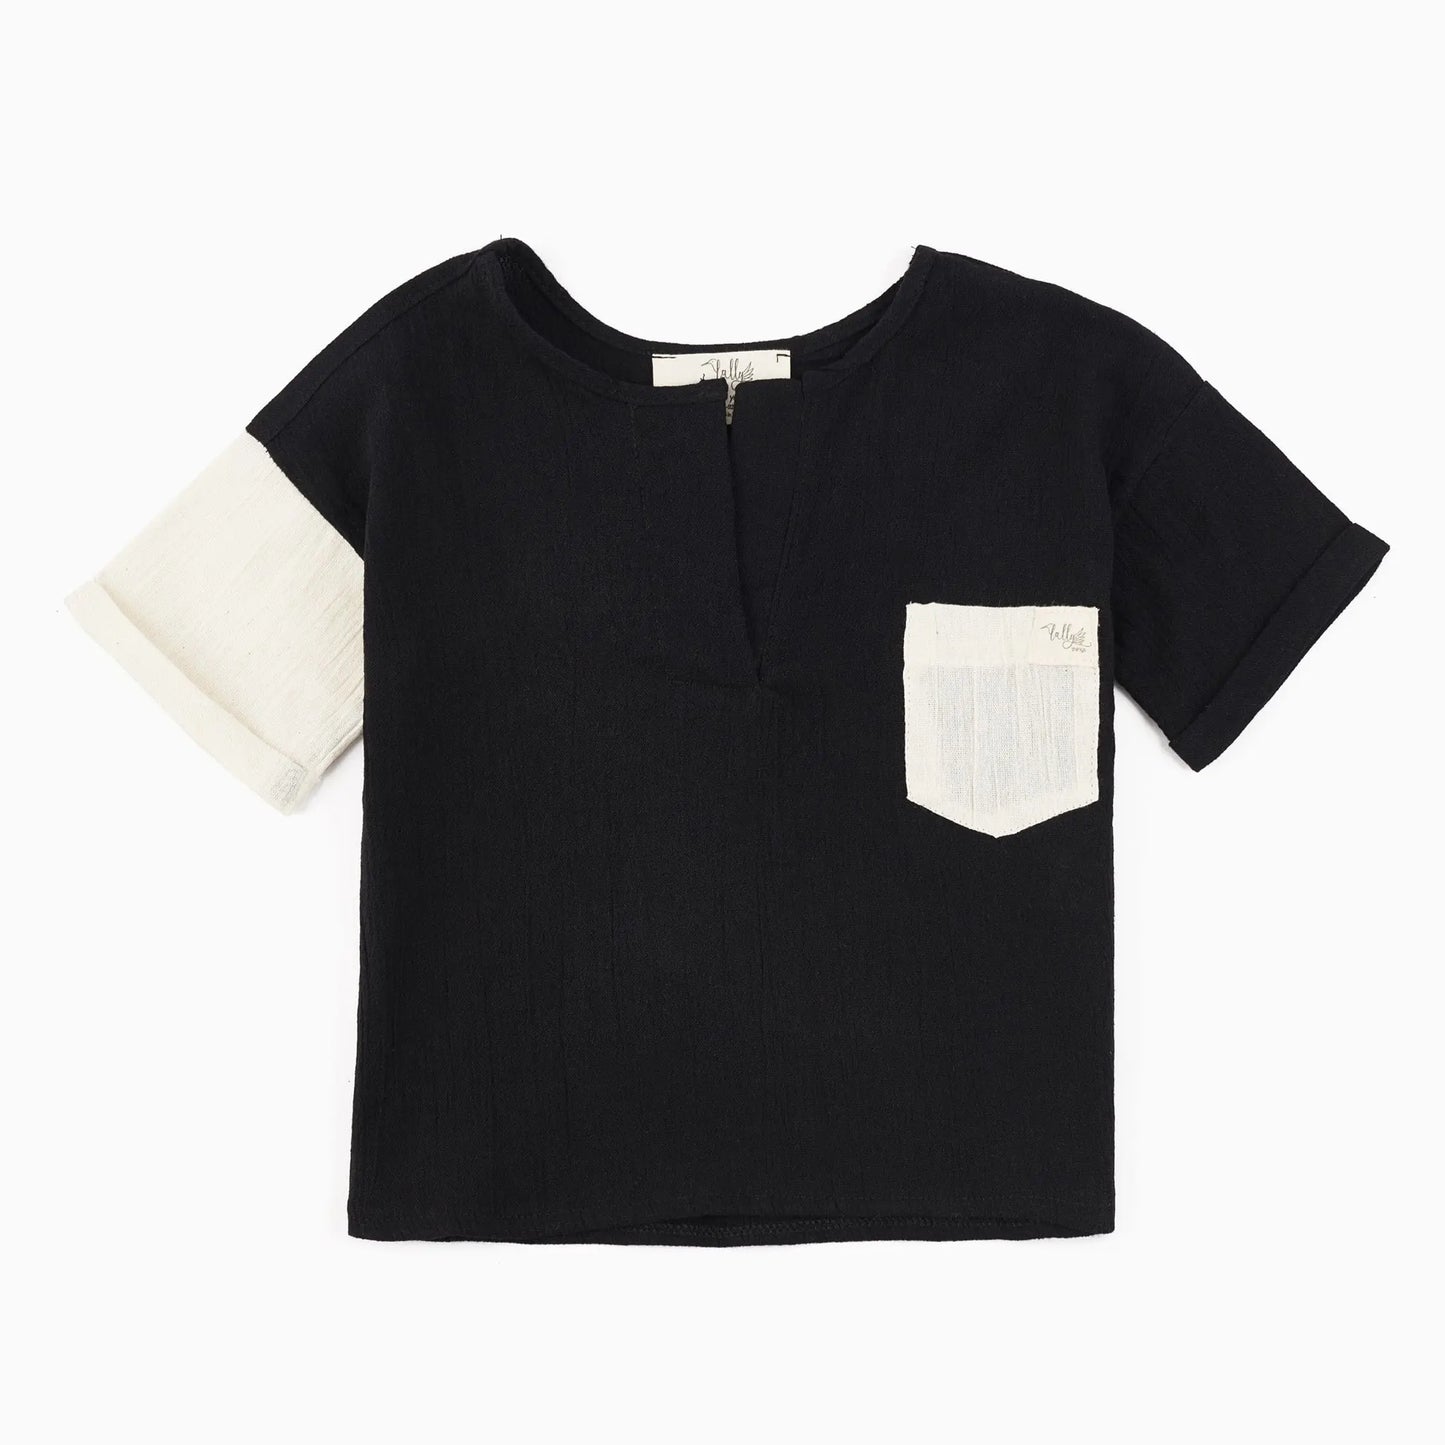 ColorBlock Siyah Beyaz Unisex Çocuk T-Shirt Lally Things